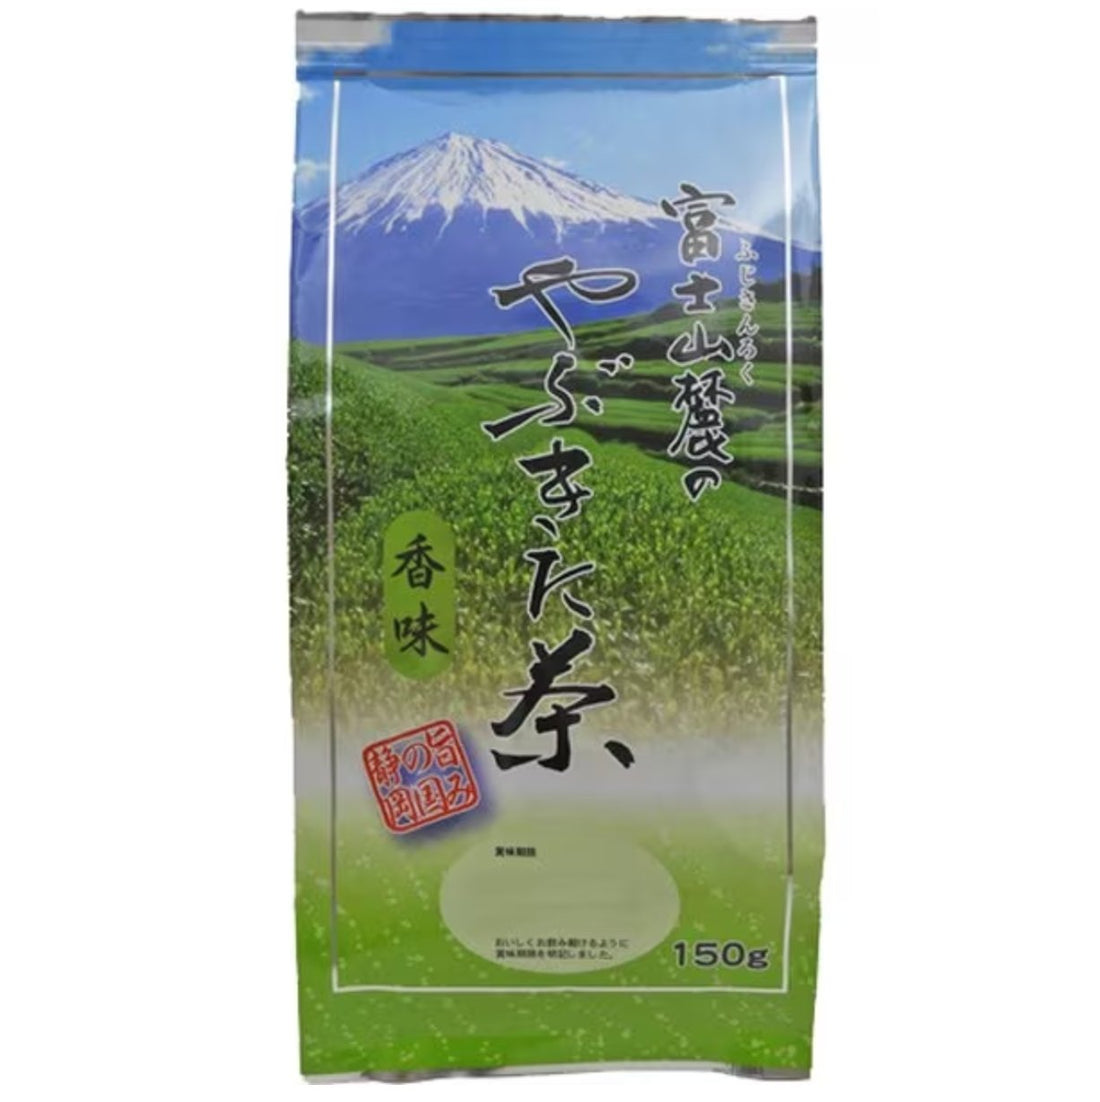 Oigawa Tea Garden Yabukita Tea Flavor at the foot of Mt. Fuji 150g - NihonMura